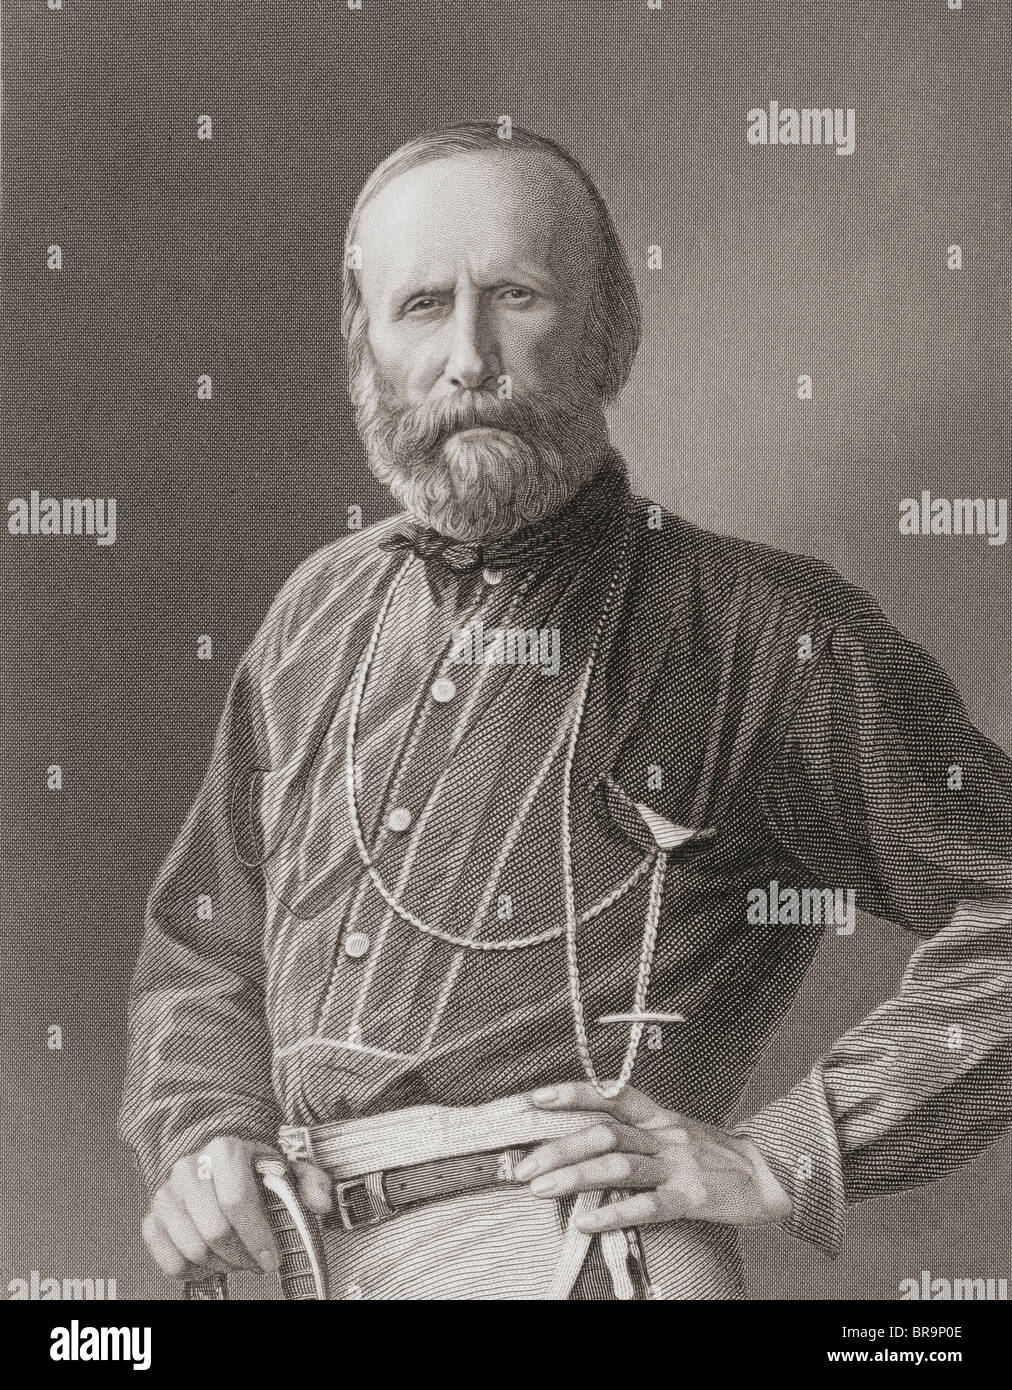 Giuseppe Garibaldi, 1807 to 1882. Italian military and political figure. Stock Photo